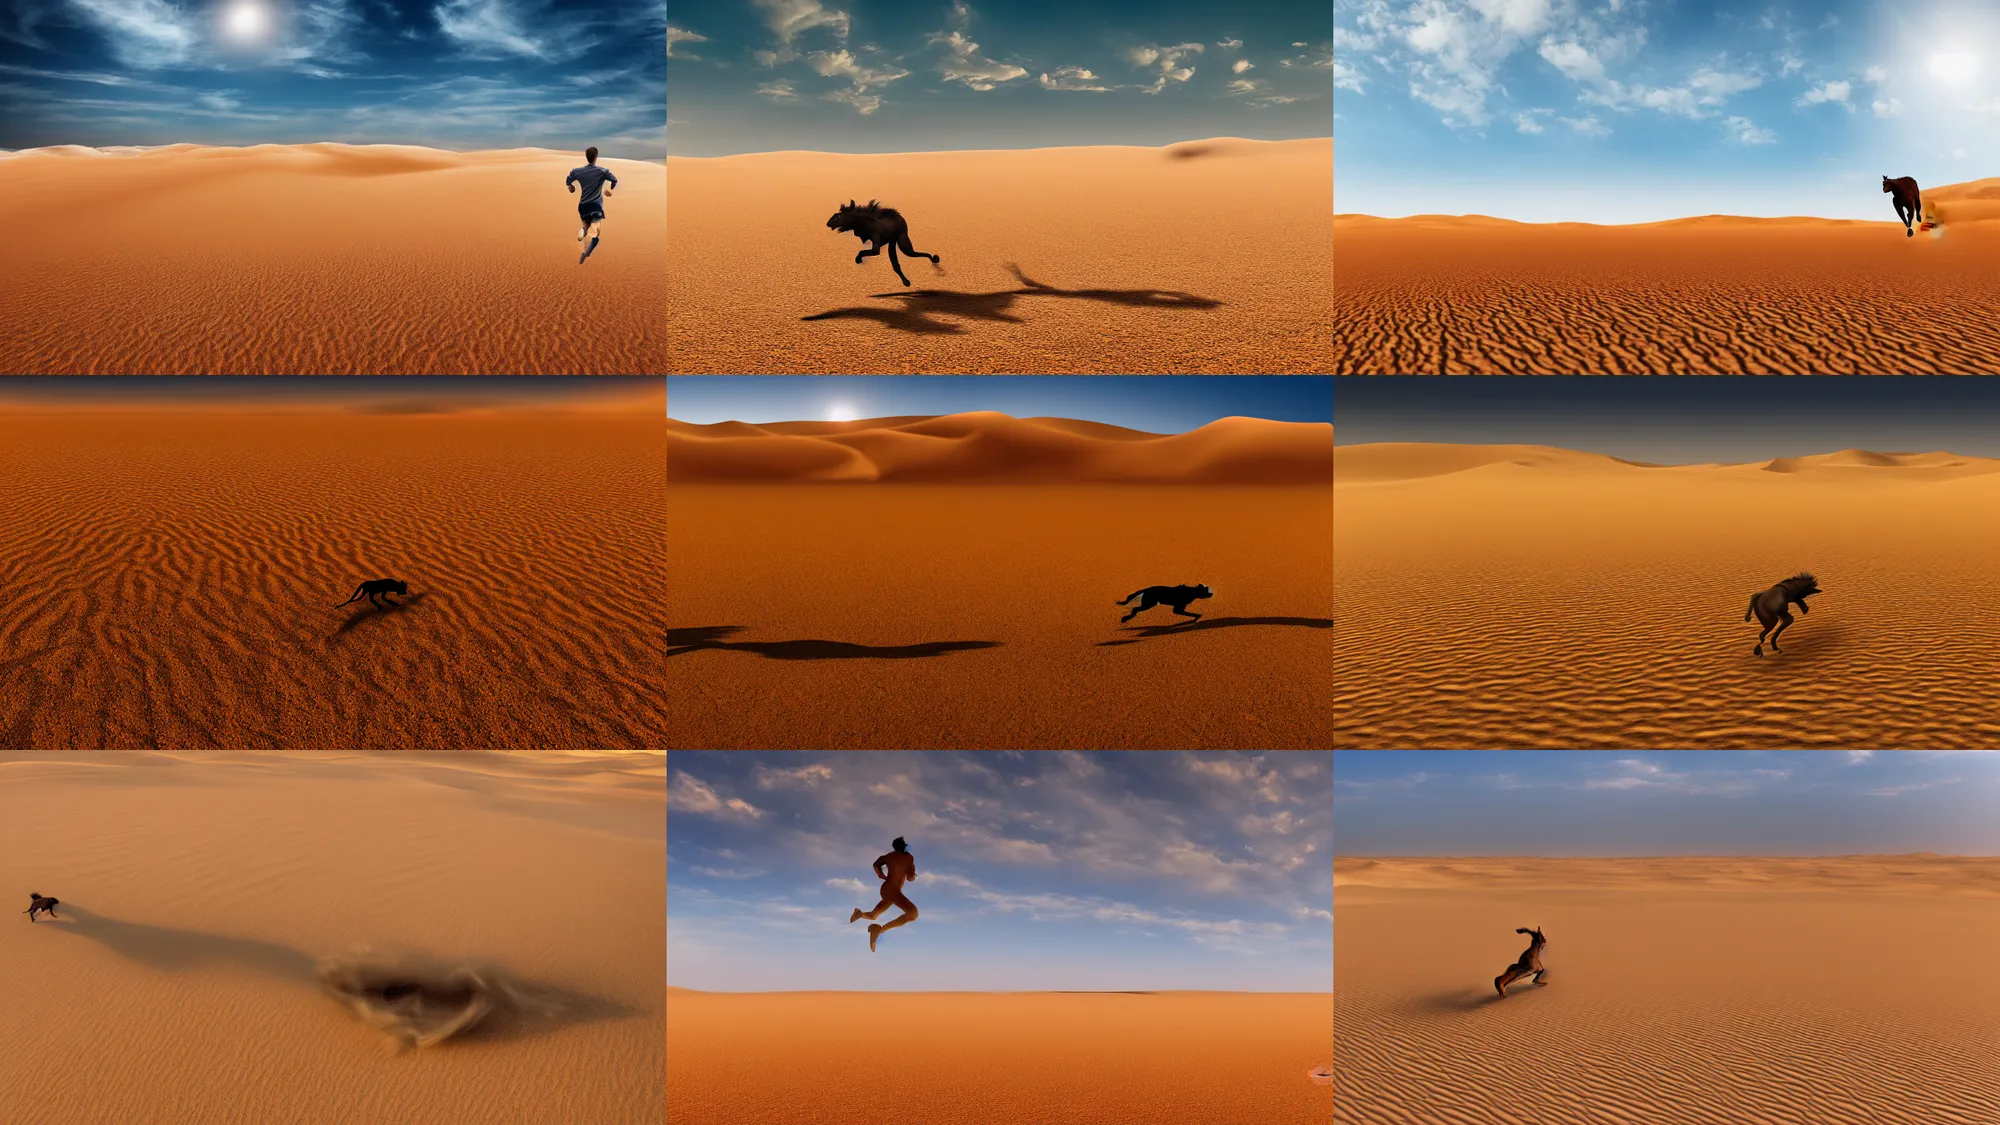 Prompt: beast running across the open desert, empty desert, sand, karst landscape, wide shot, masterpiece composition, 8 k resolution, ultra fine illustration